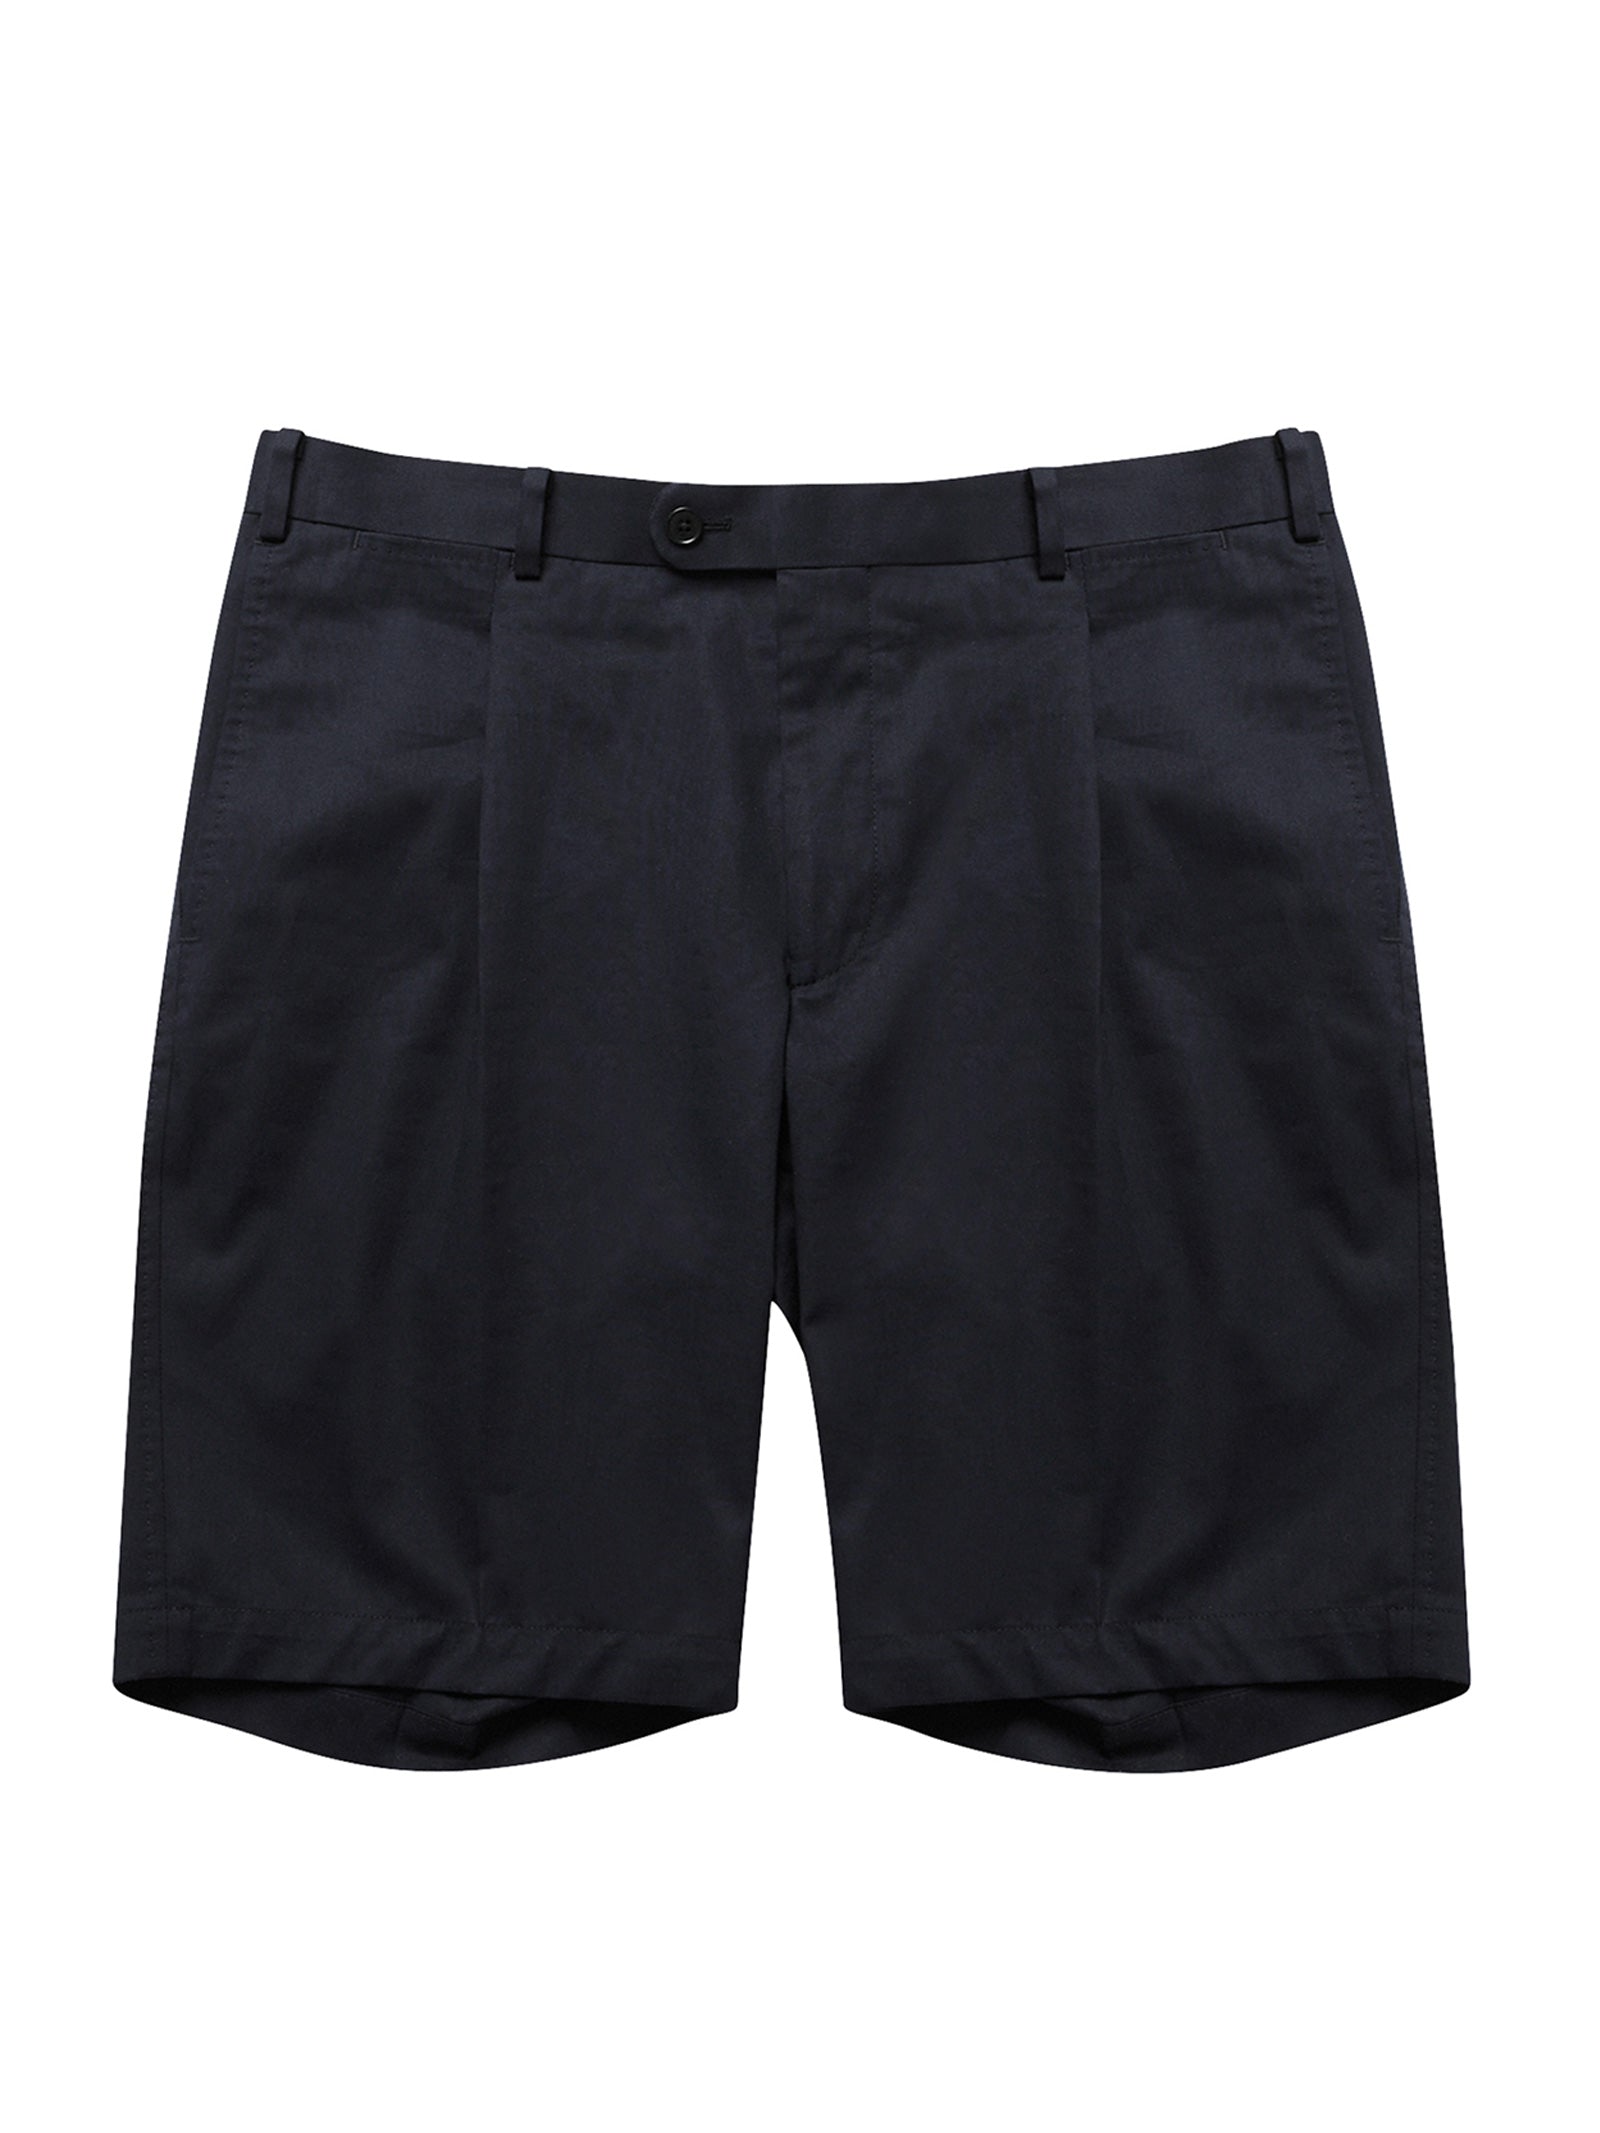 Black Summer Pleated Cotton Shorts